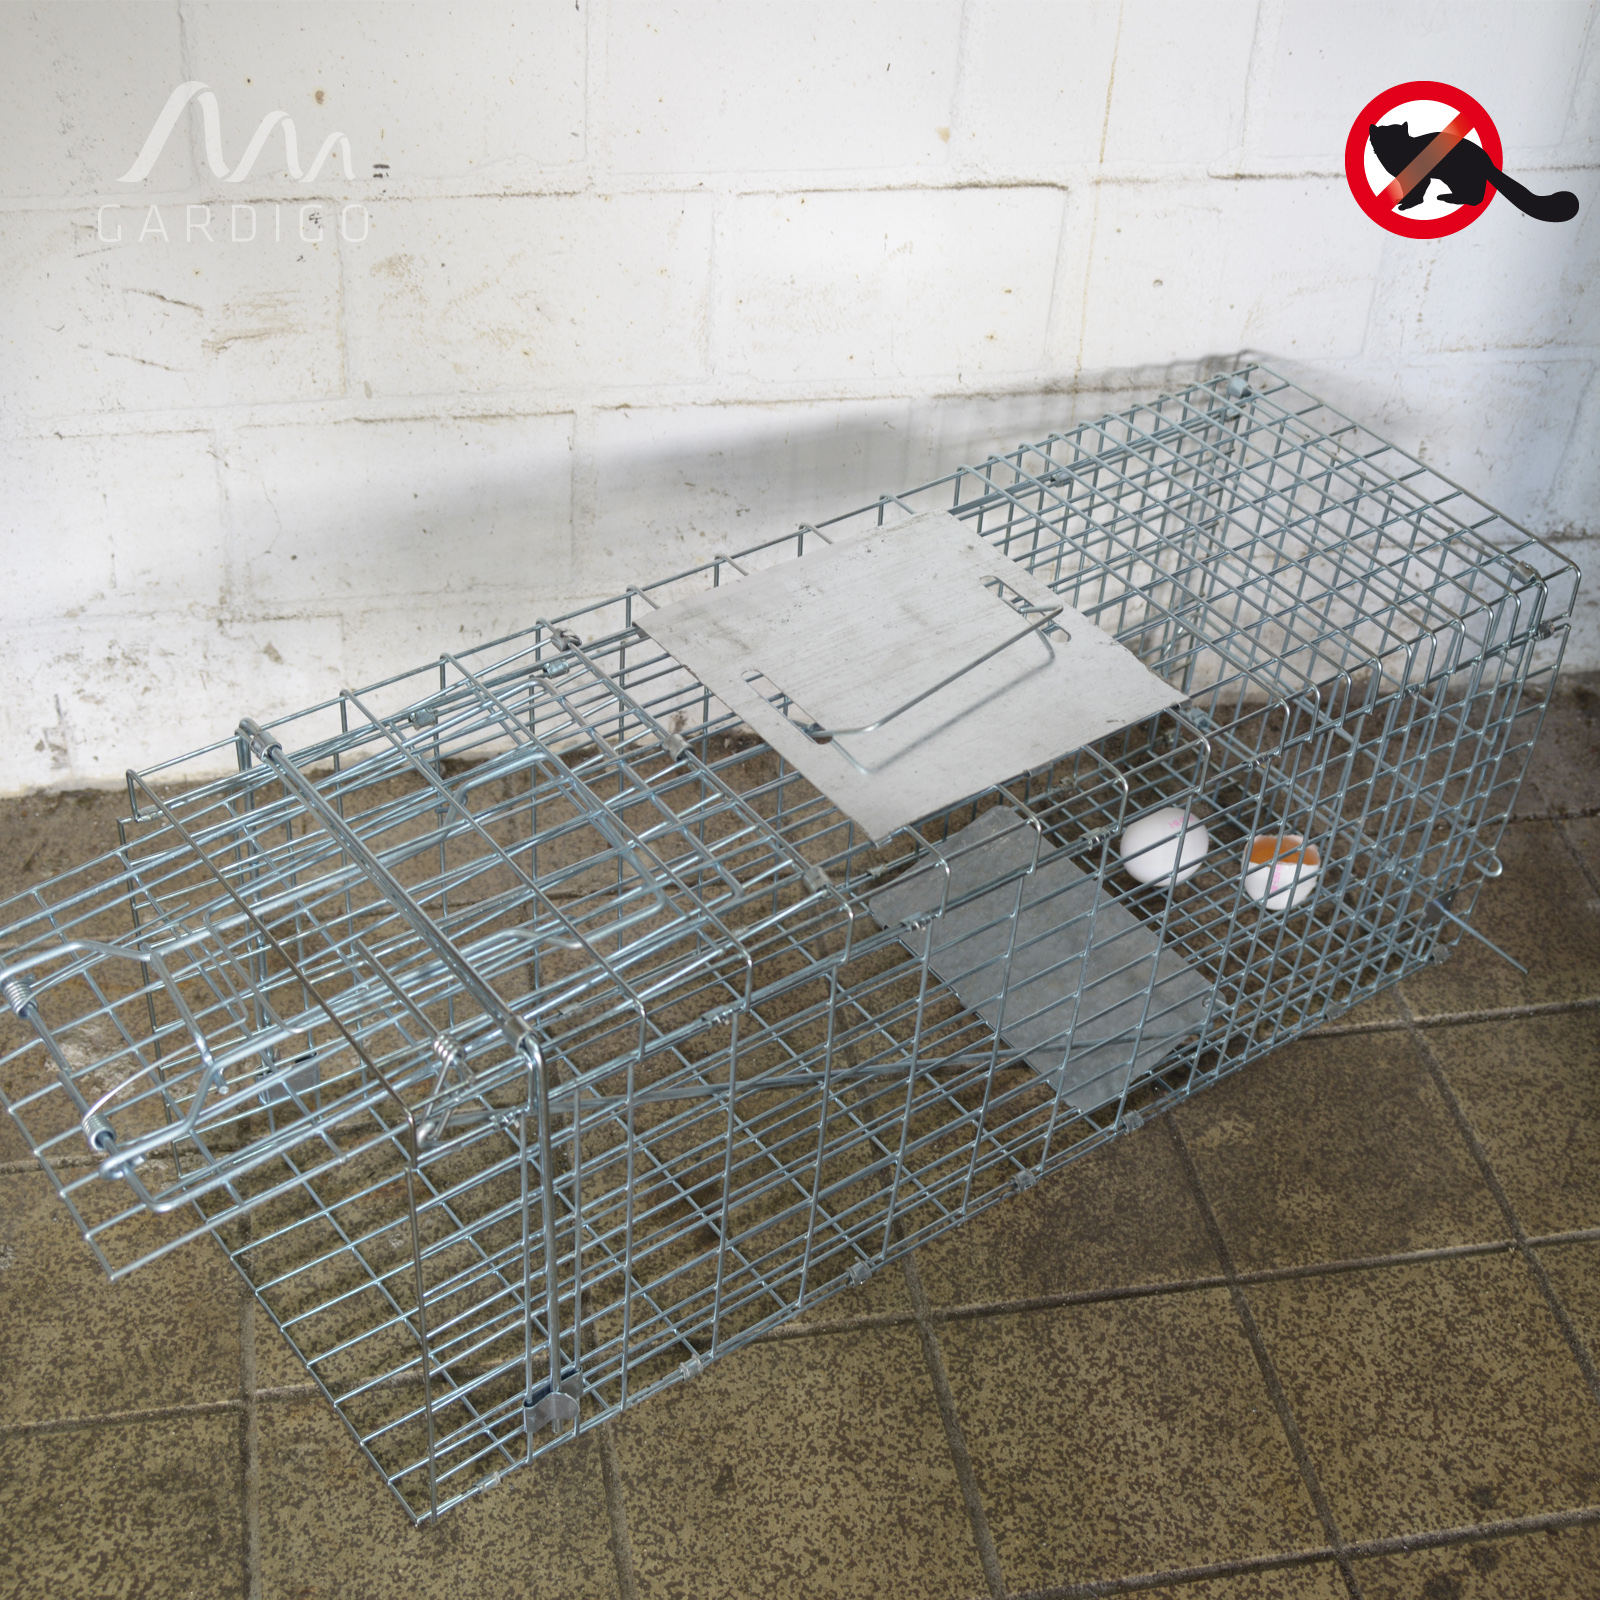 Gardigo Katzen-Marder-Lebendfalle Käfig